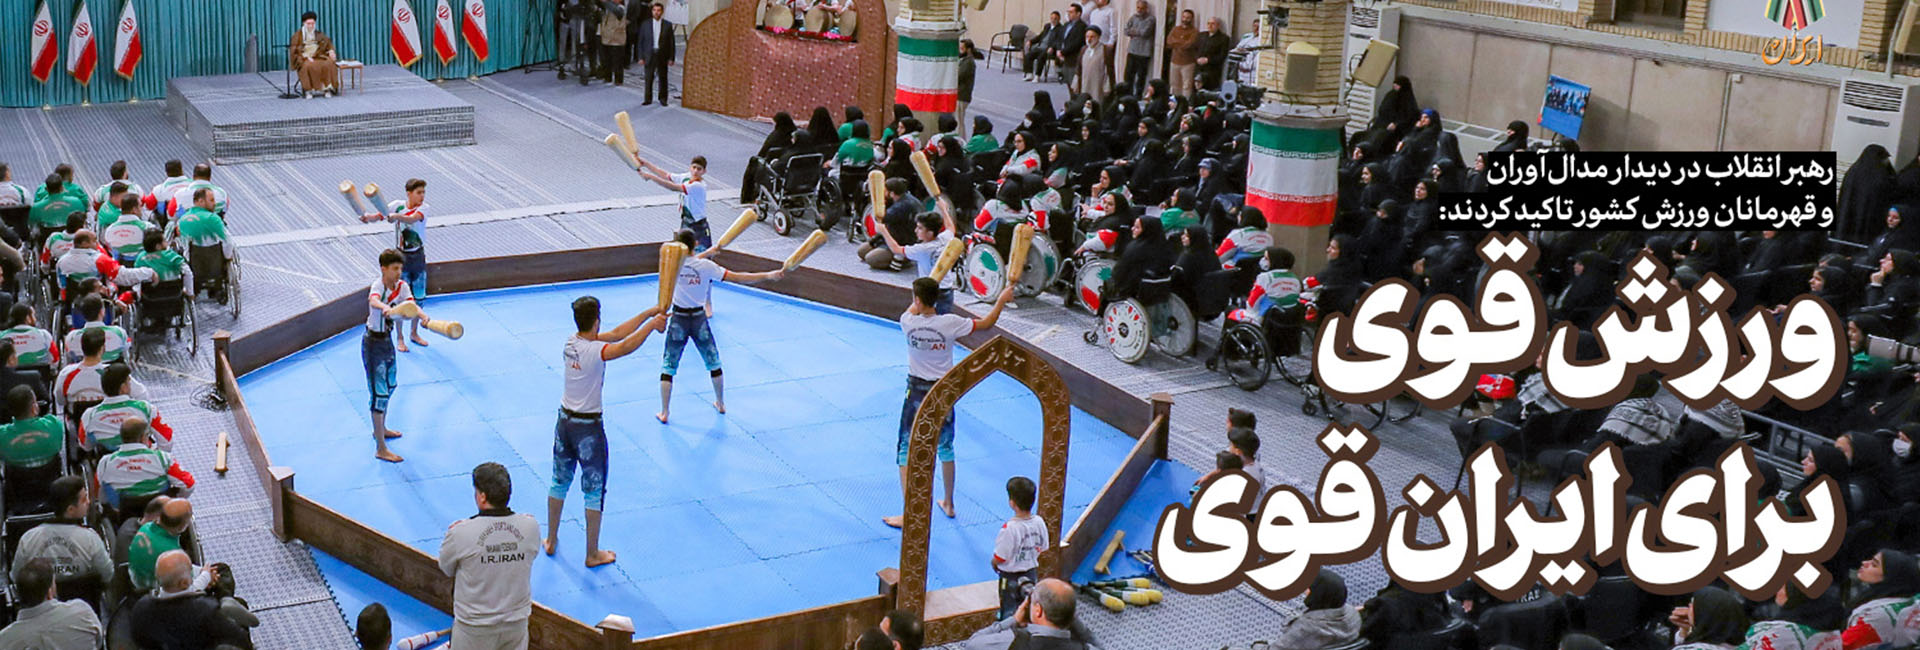 ایران قوی؛ ورزش قوی